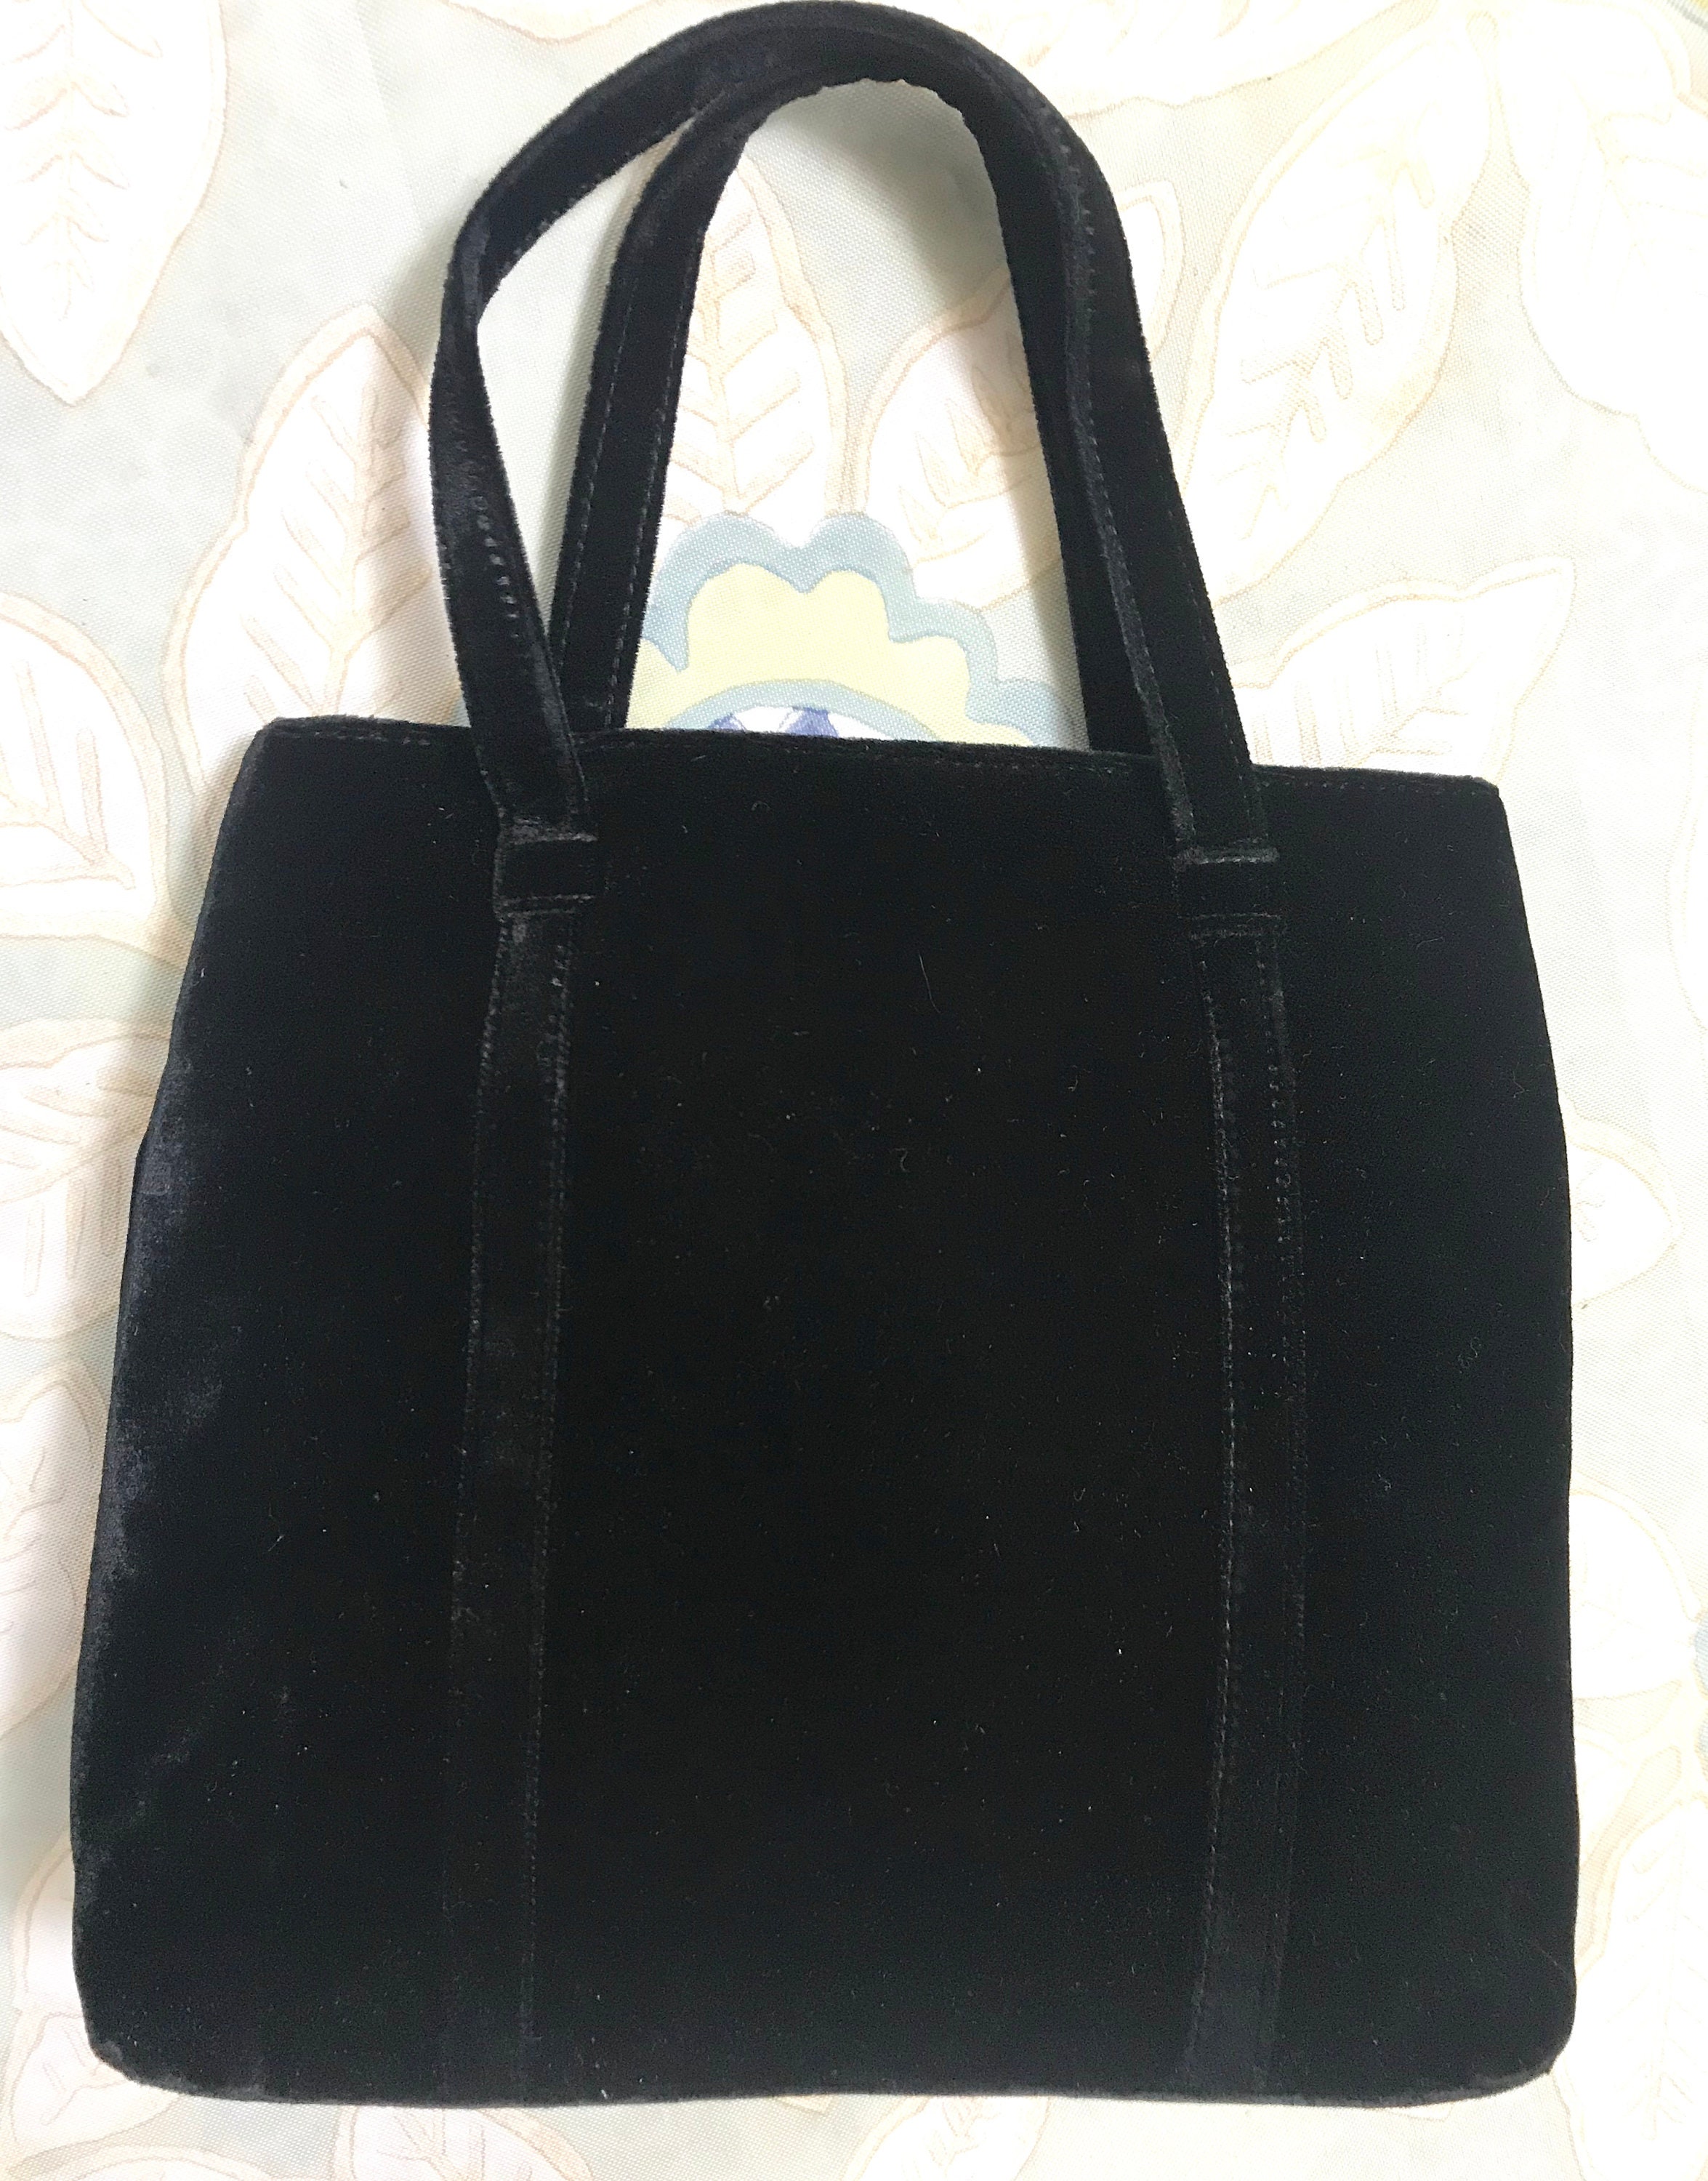 MINT. Vintage Paloma Picasso black velvet tote bag with golden